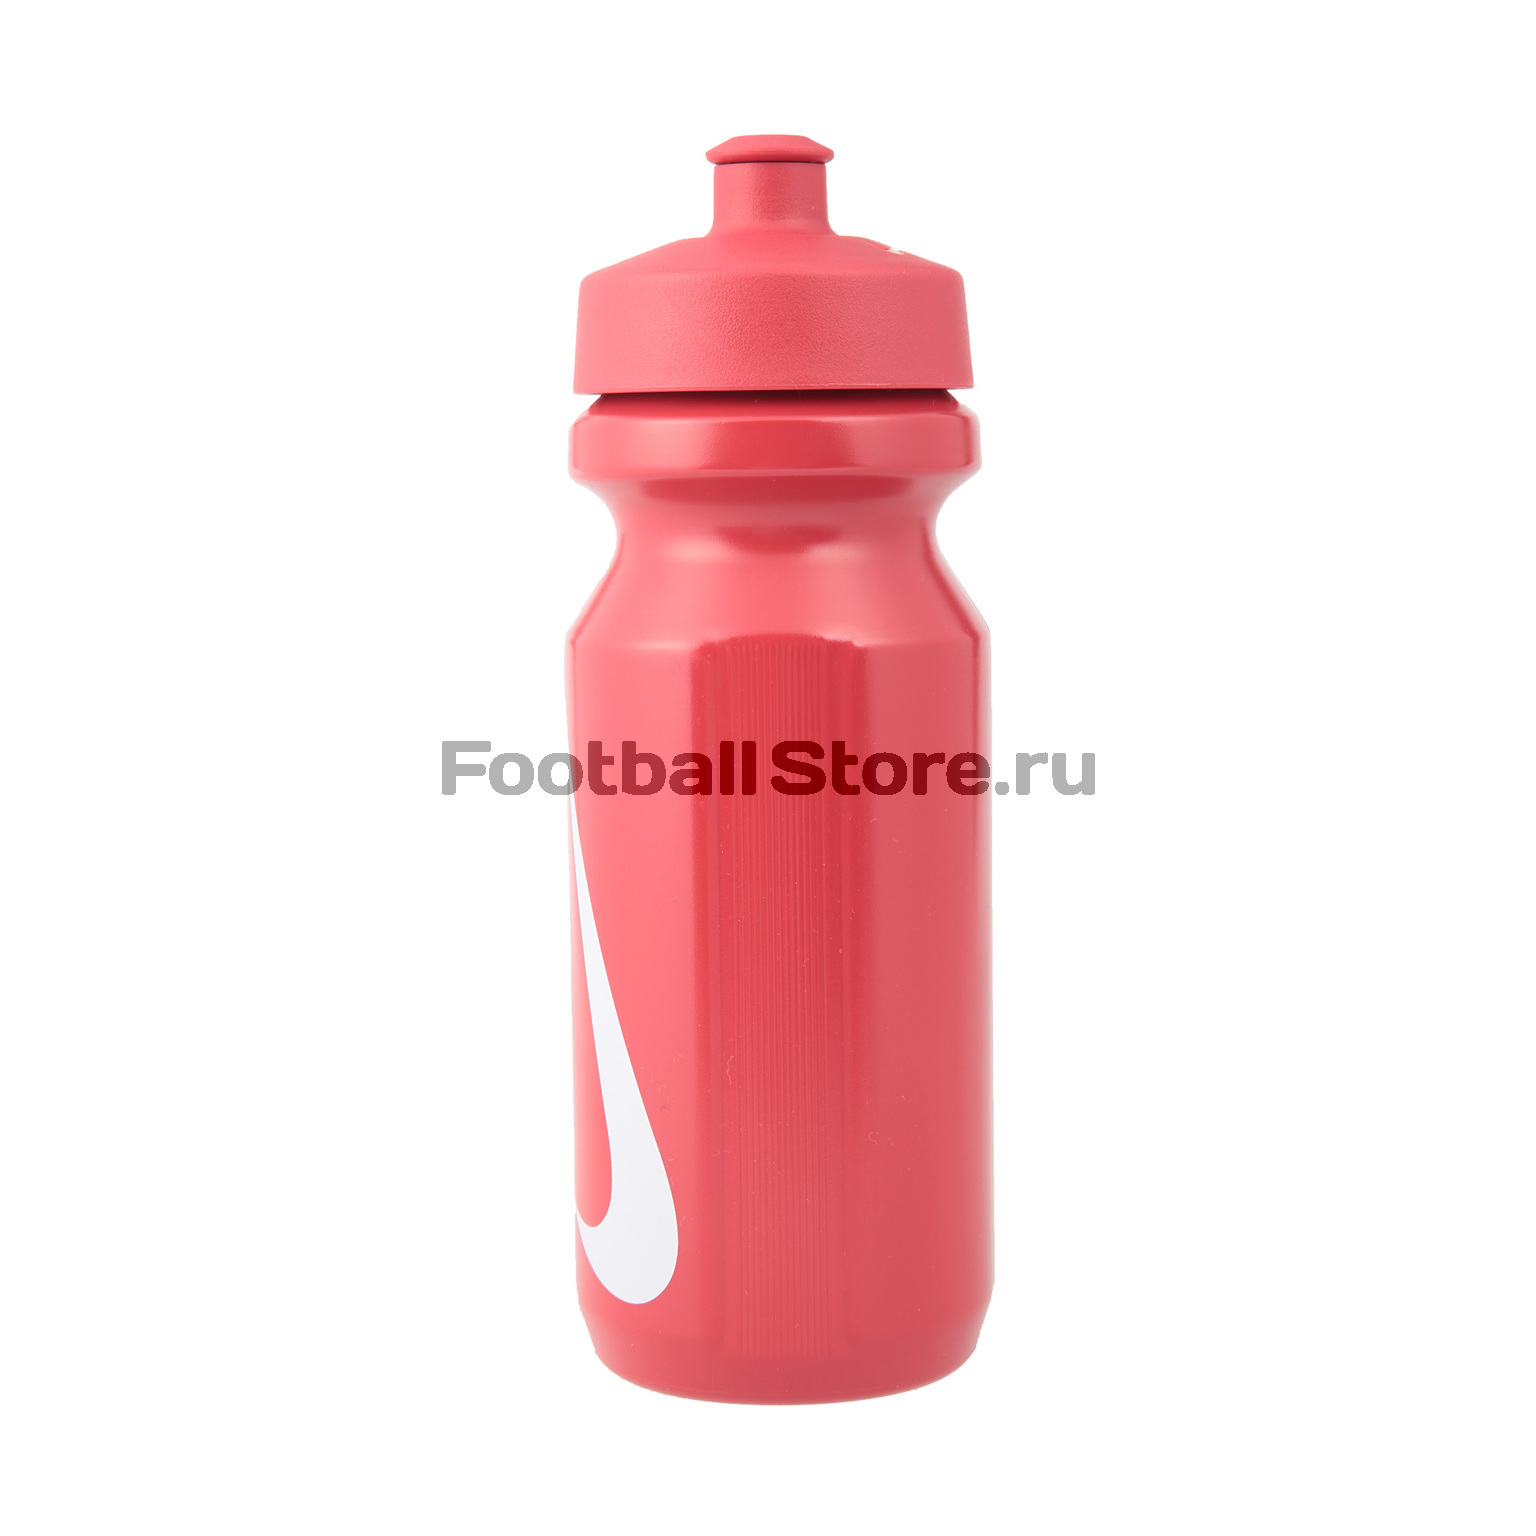 Бутылка для воды Nike Big Mouth Water 220 Z Sport N.OB.17.660.22